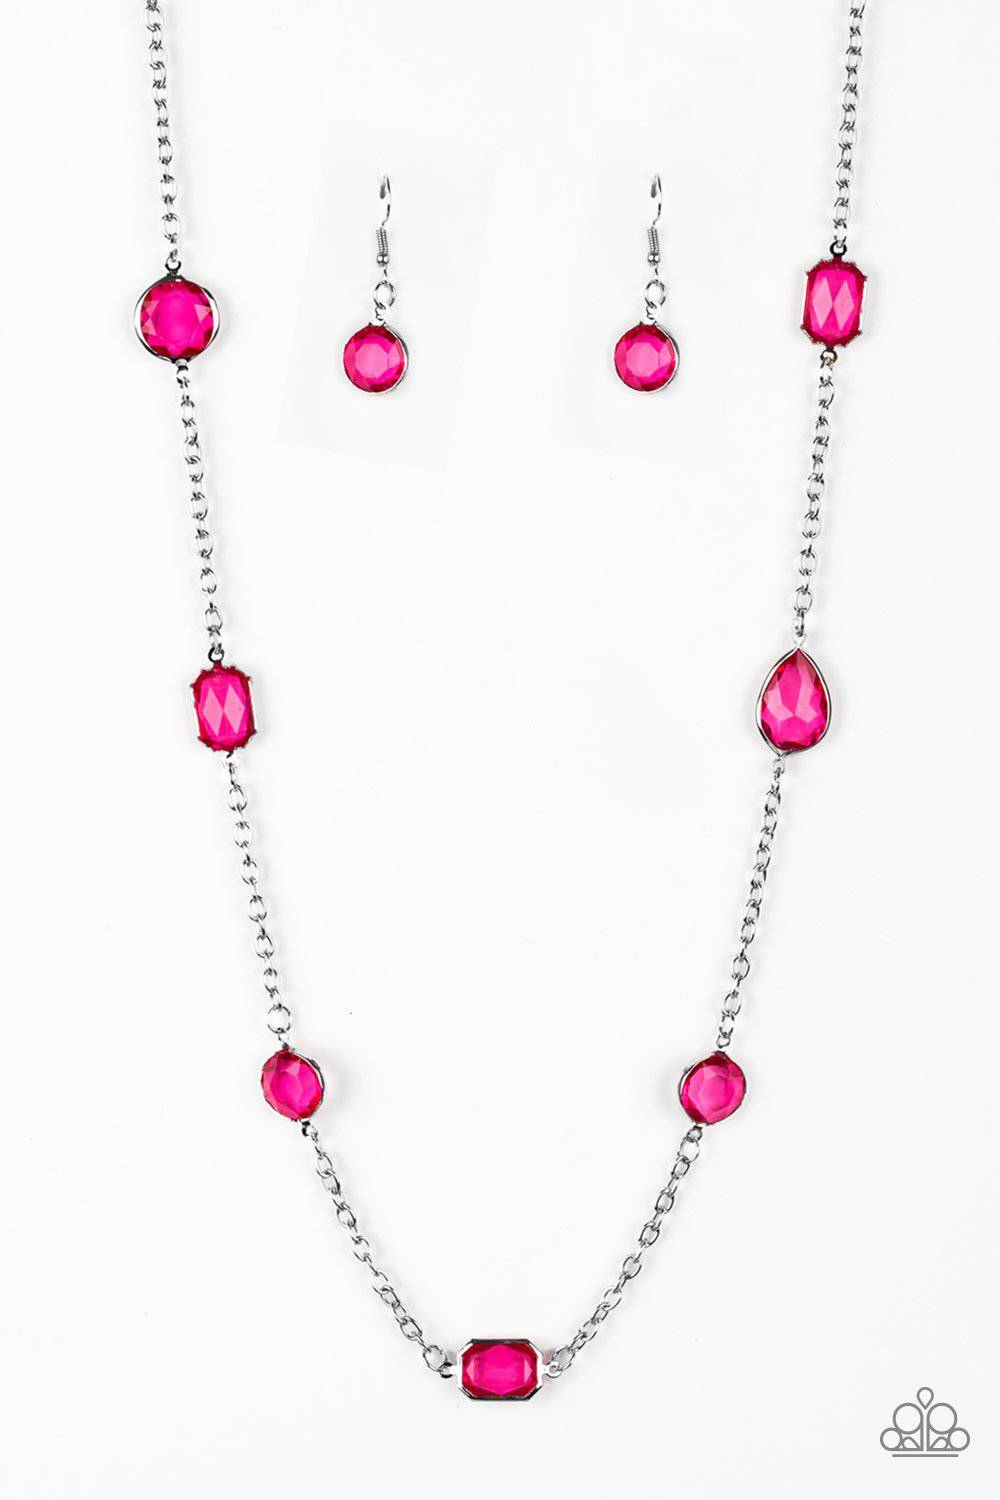 Glassy Glamorous - Glassy Pink Gemstones Necklace - Paparazzi Accessories - GlaMarous Titi Jewels